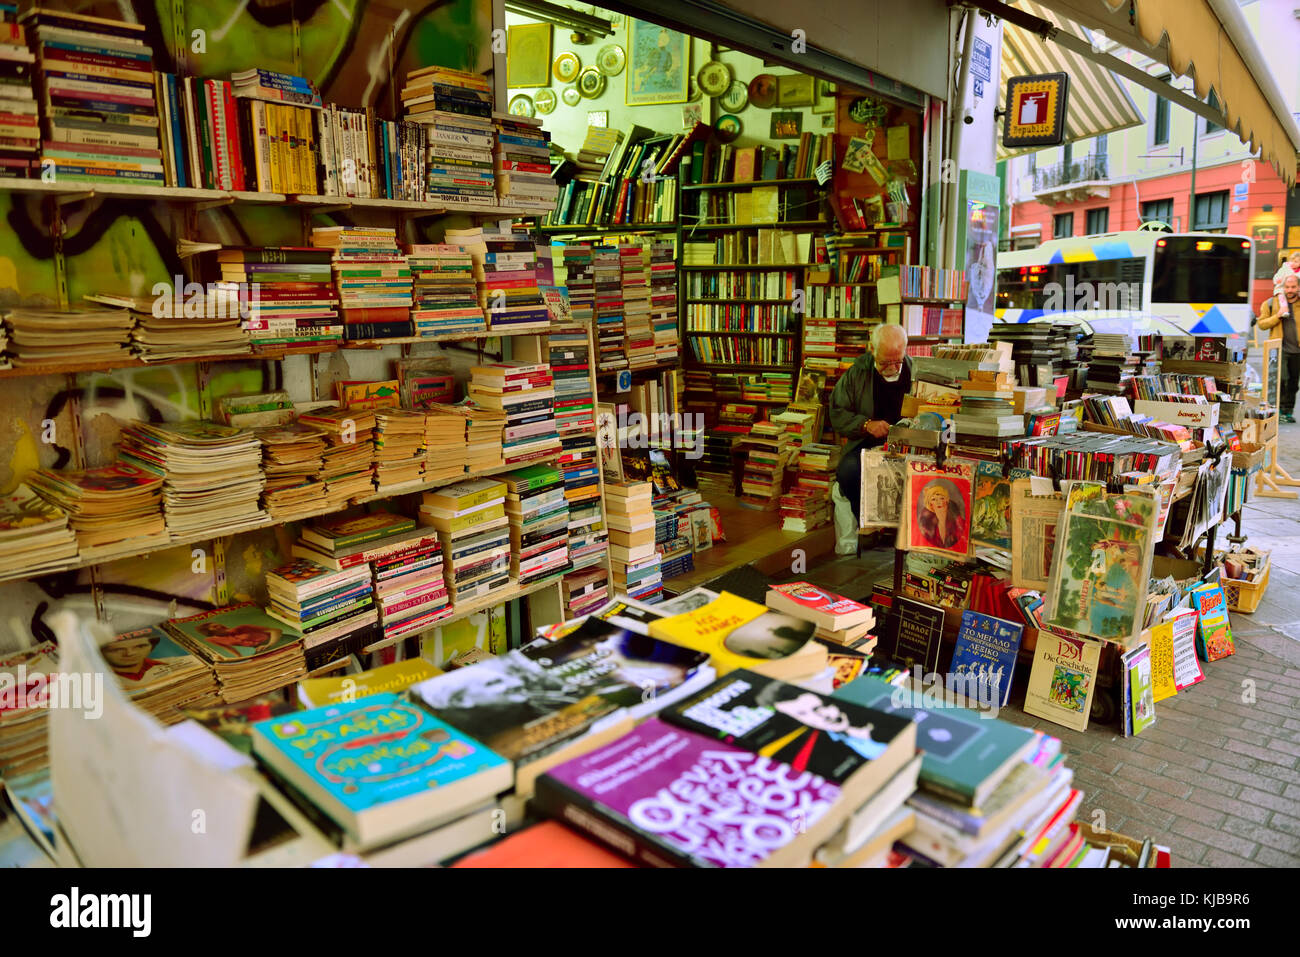 Street market with books and collectables off Ermou Street Monastiriaki area of central Athens, Greece Stock Photo